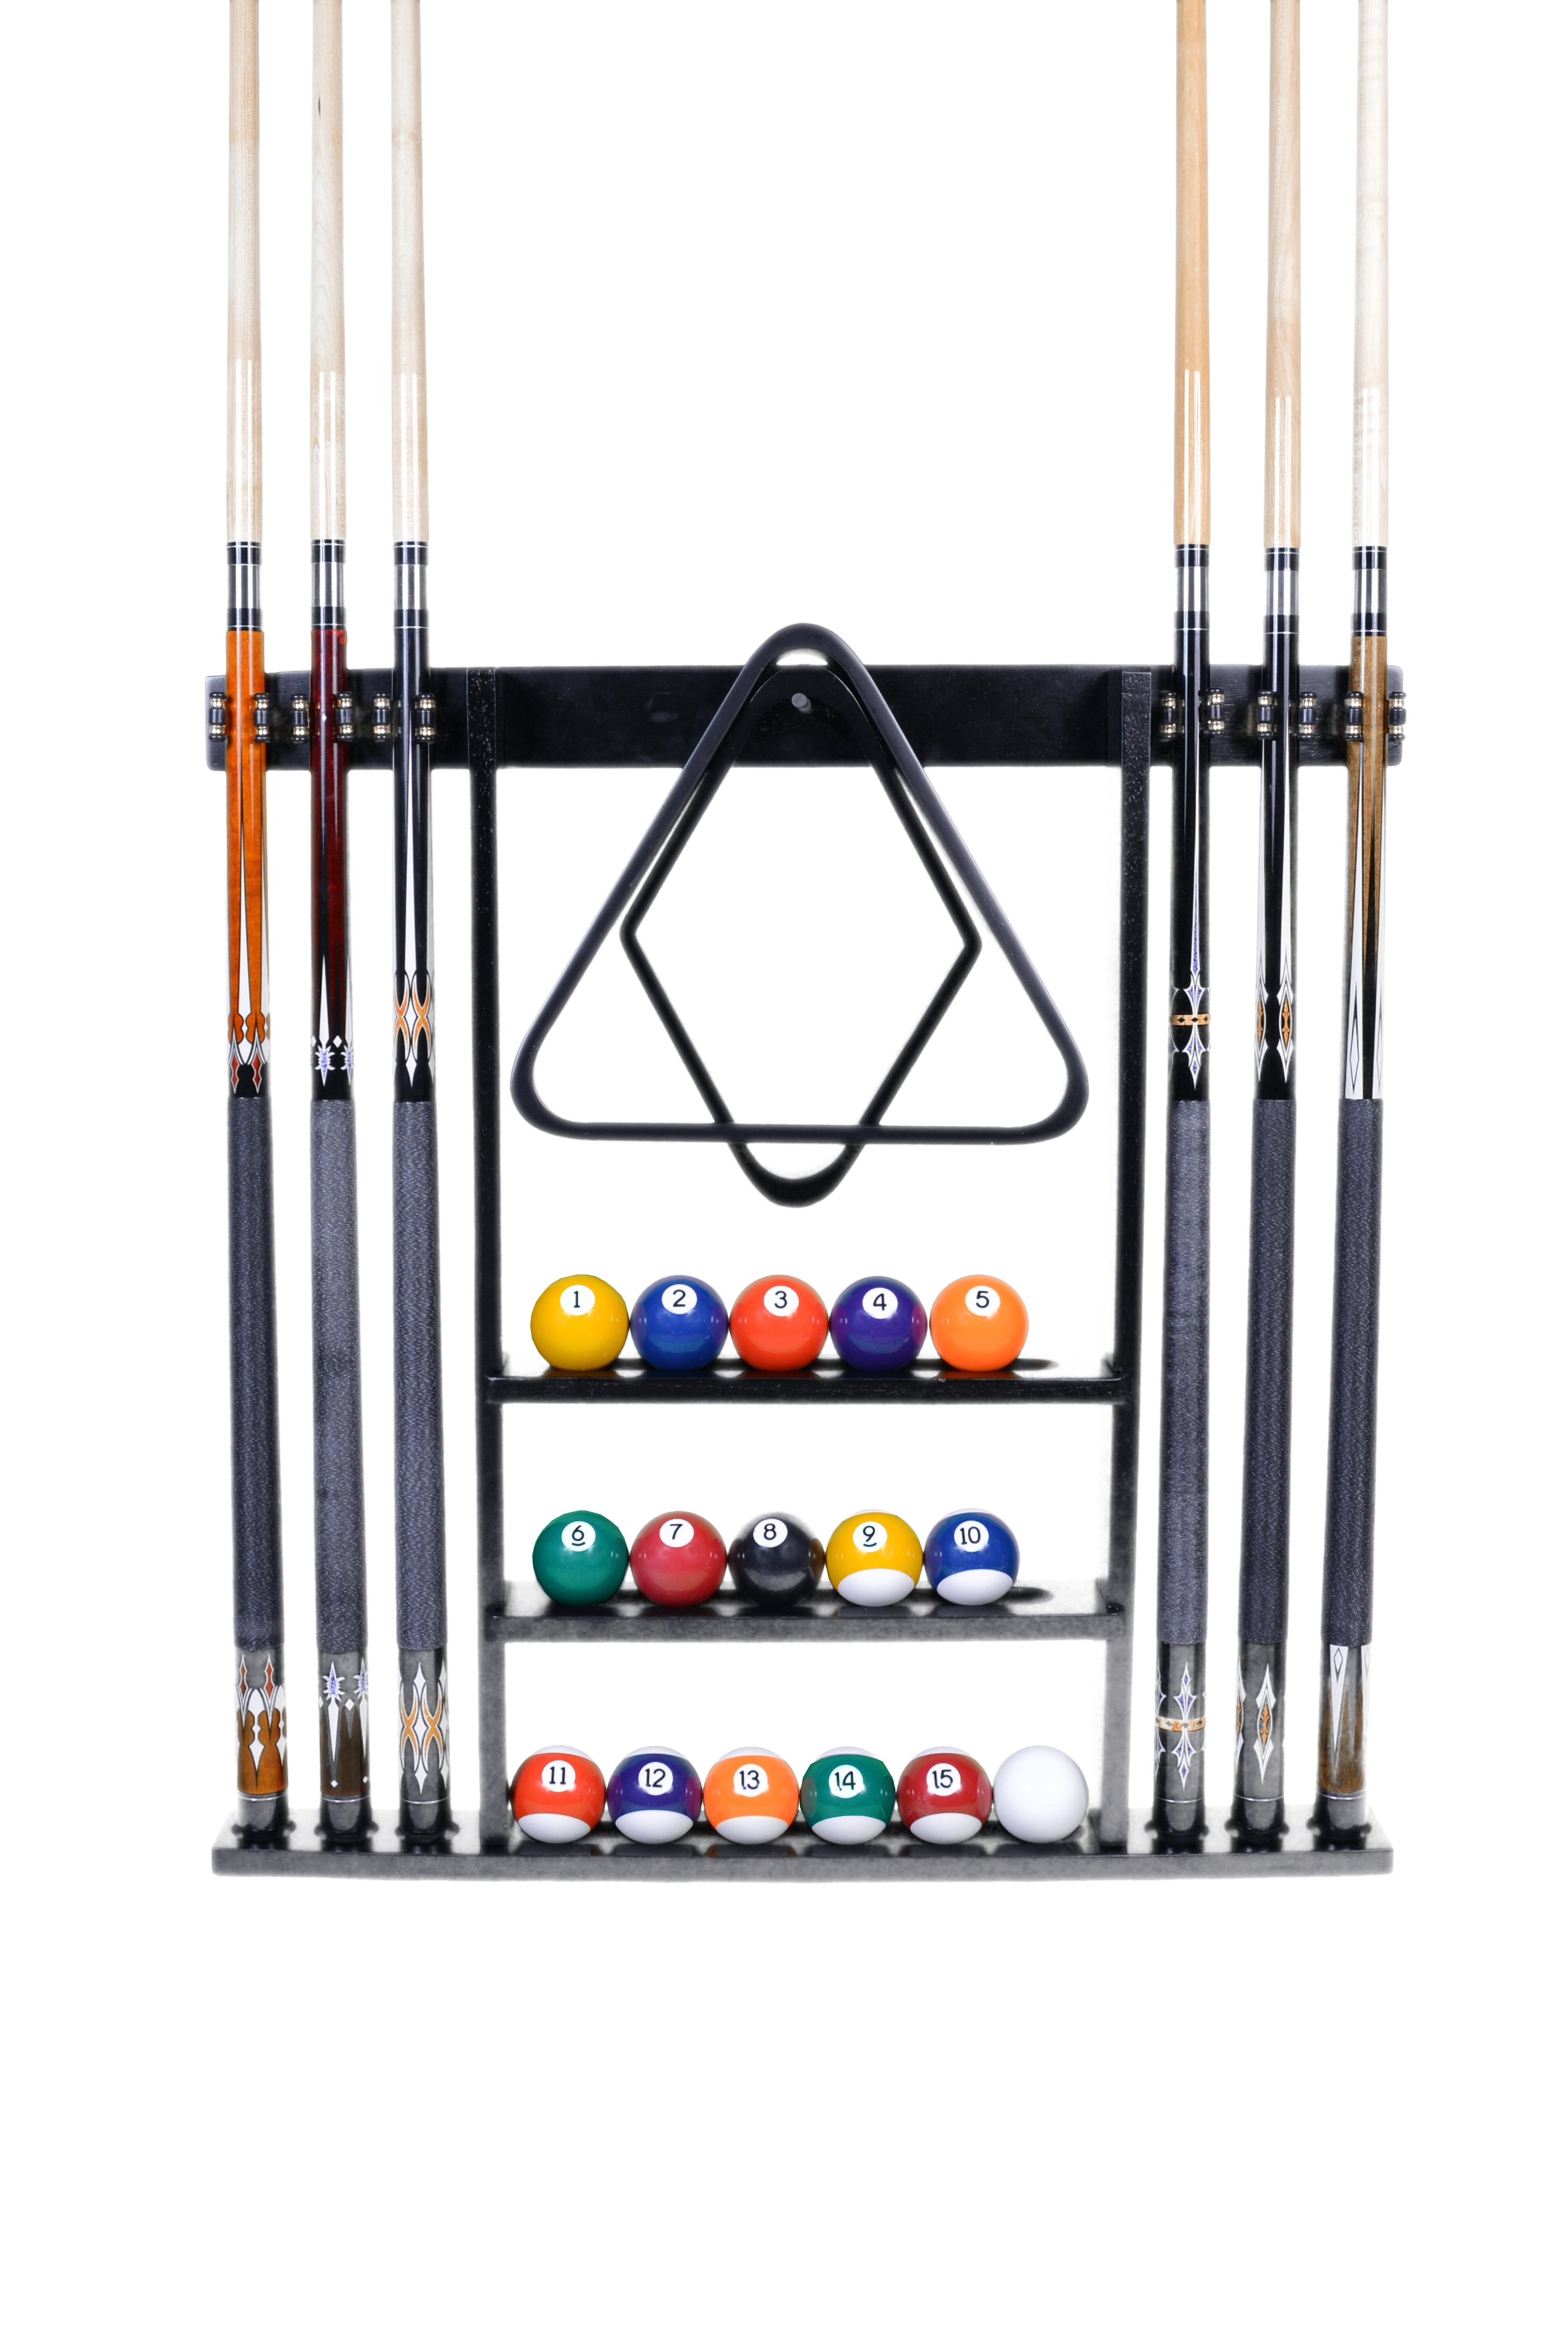 12* Plastic Pool Cue Stick Wall Mounted Rack Billiard Cue Stick Holder Kit 